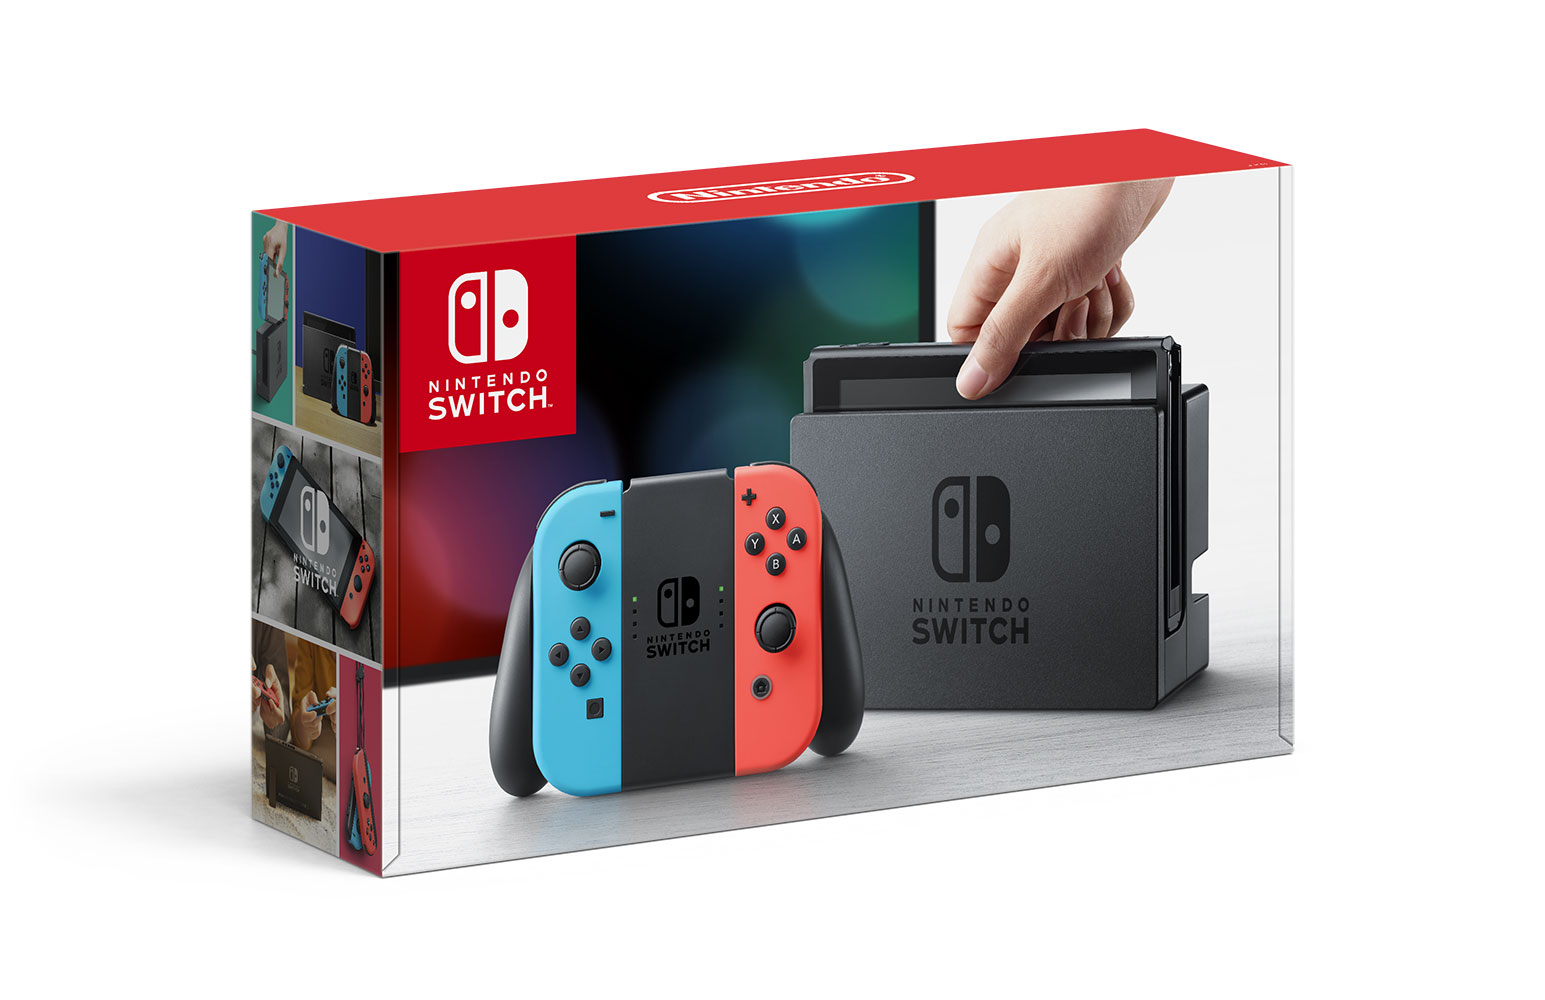 「Nintendo Switch」の発売日が2017年3月3日に決定。価格は2万9980円